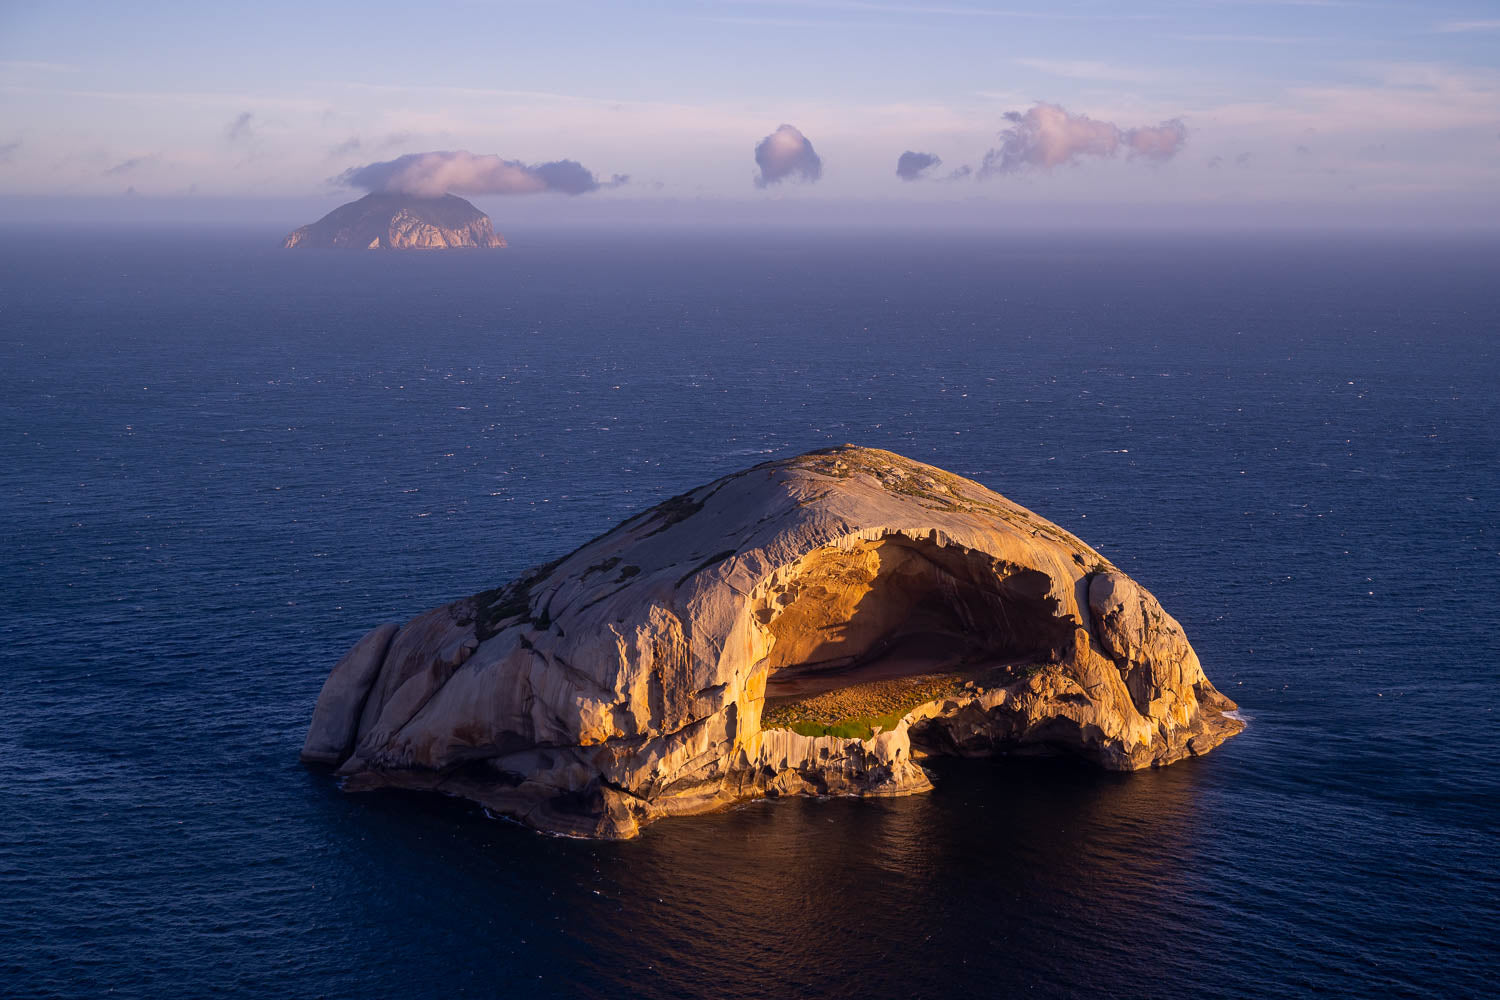 Scull Rock and Rodondo island, Wilson's Promontory